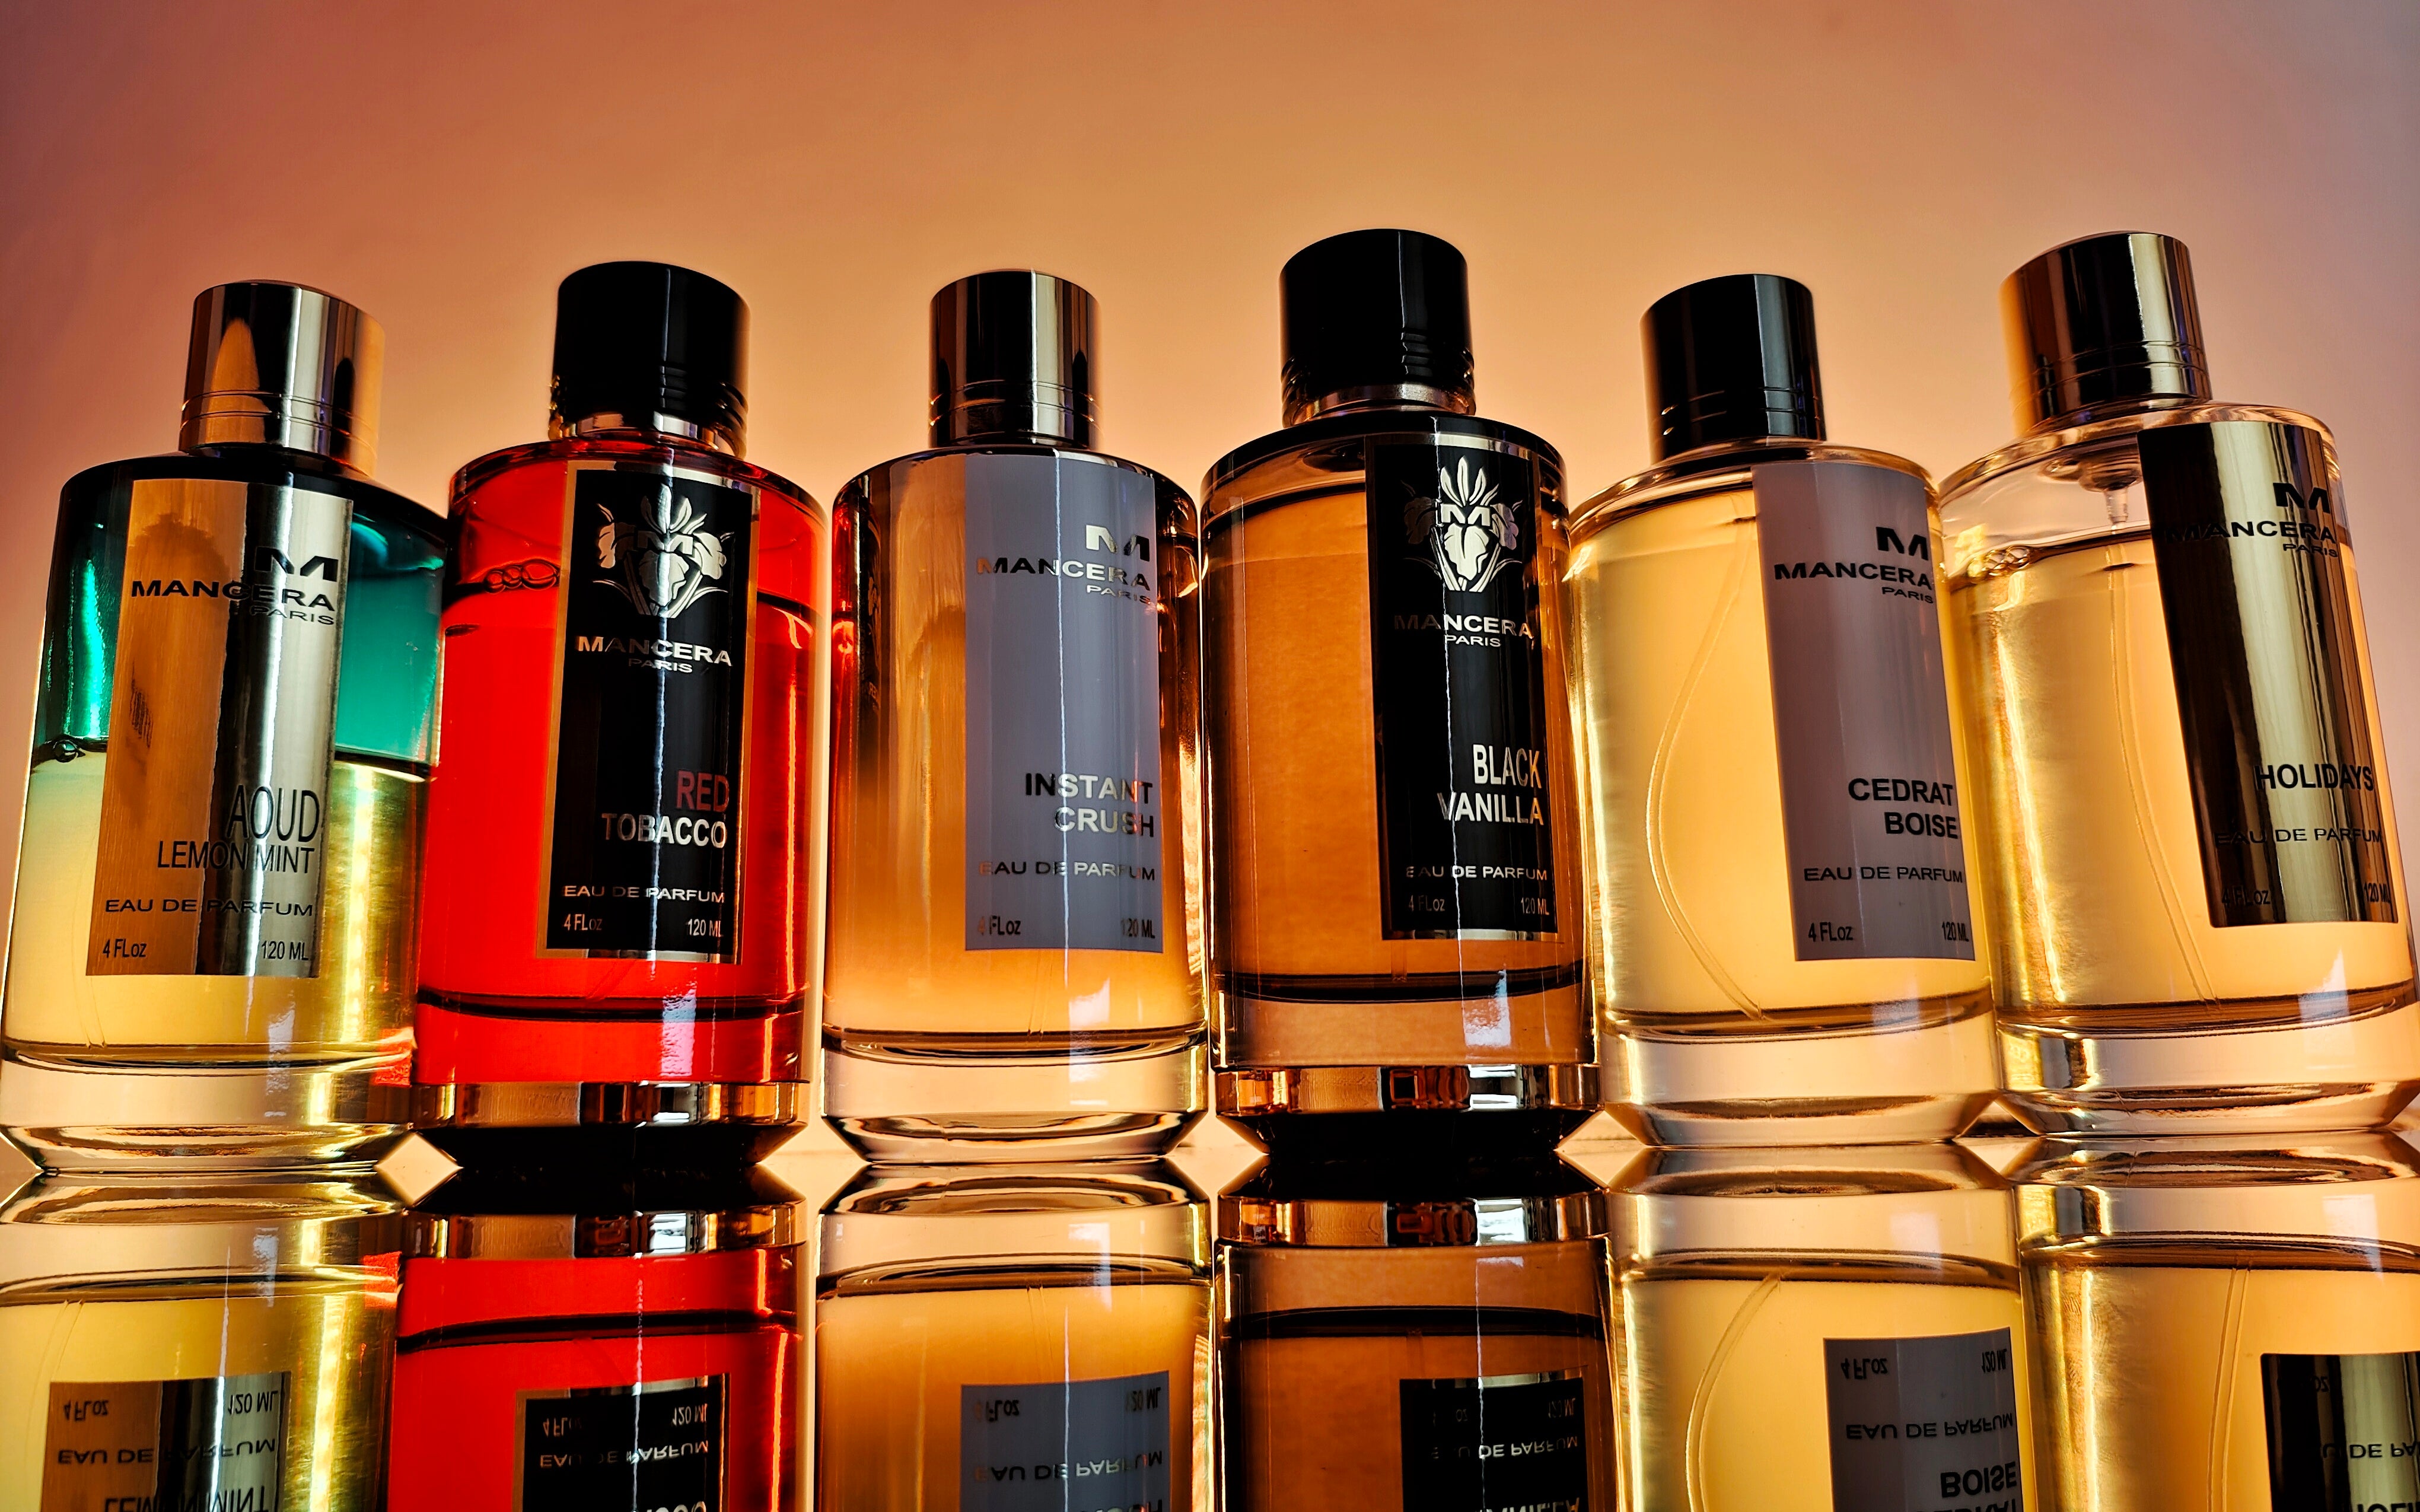 Parfums de Marly Fresh Discovery Set  Fragrance Sample Set – Visionary  Fragrances